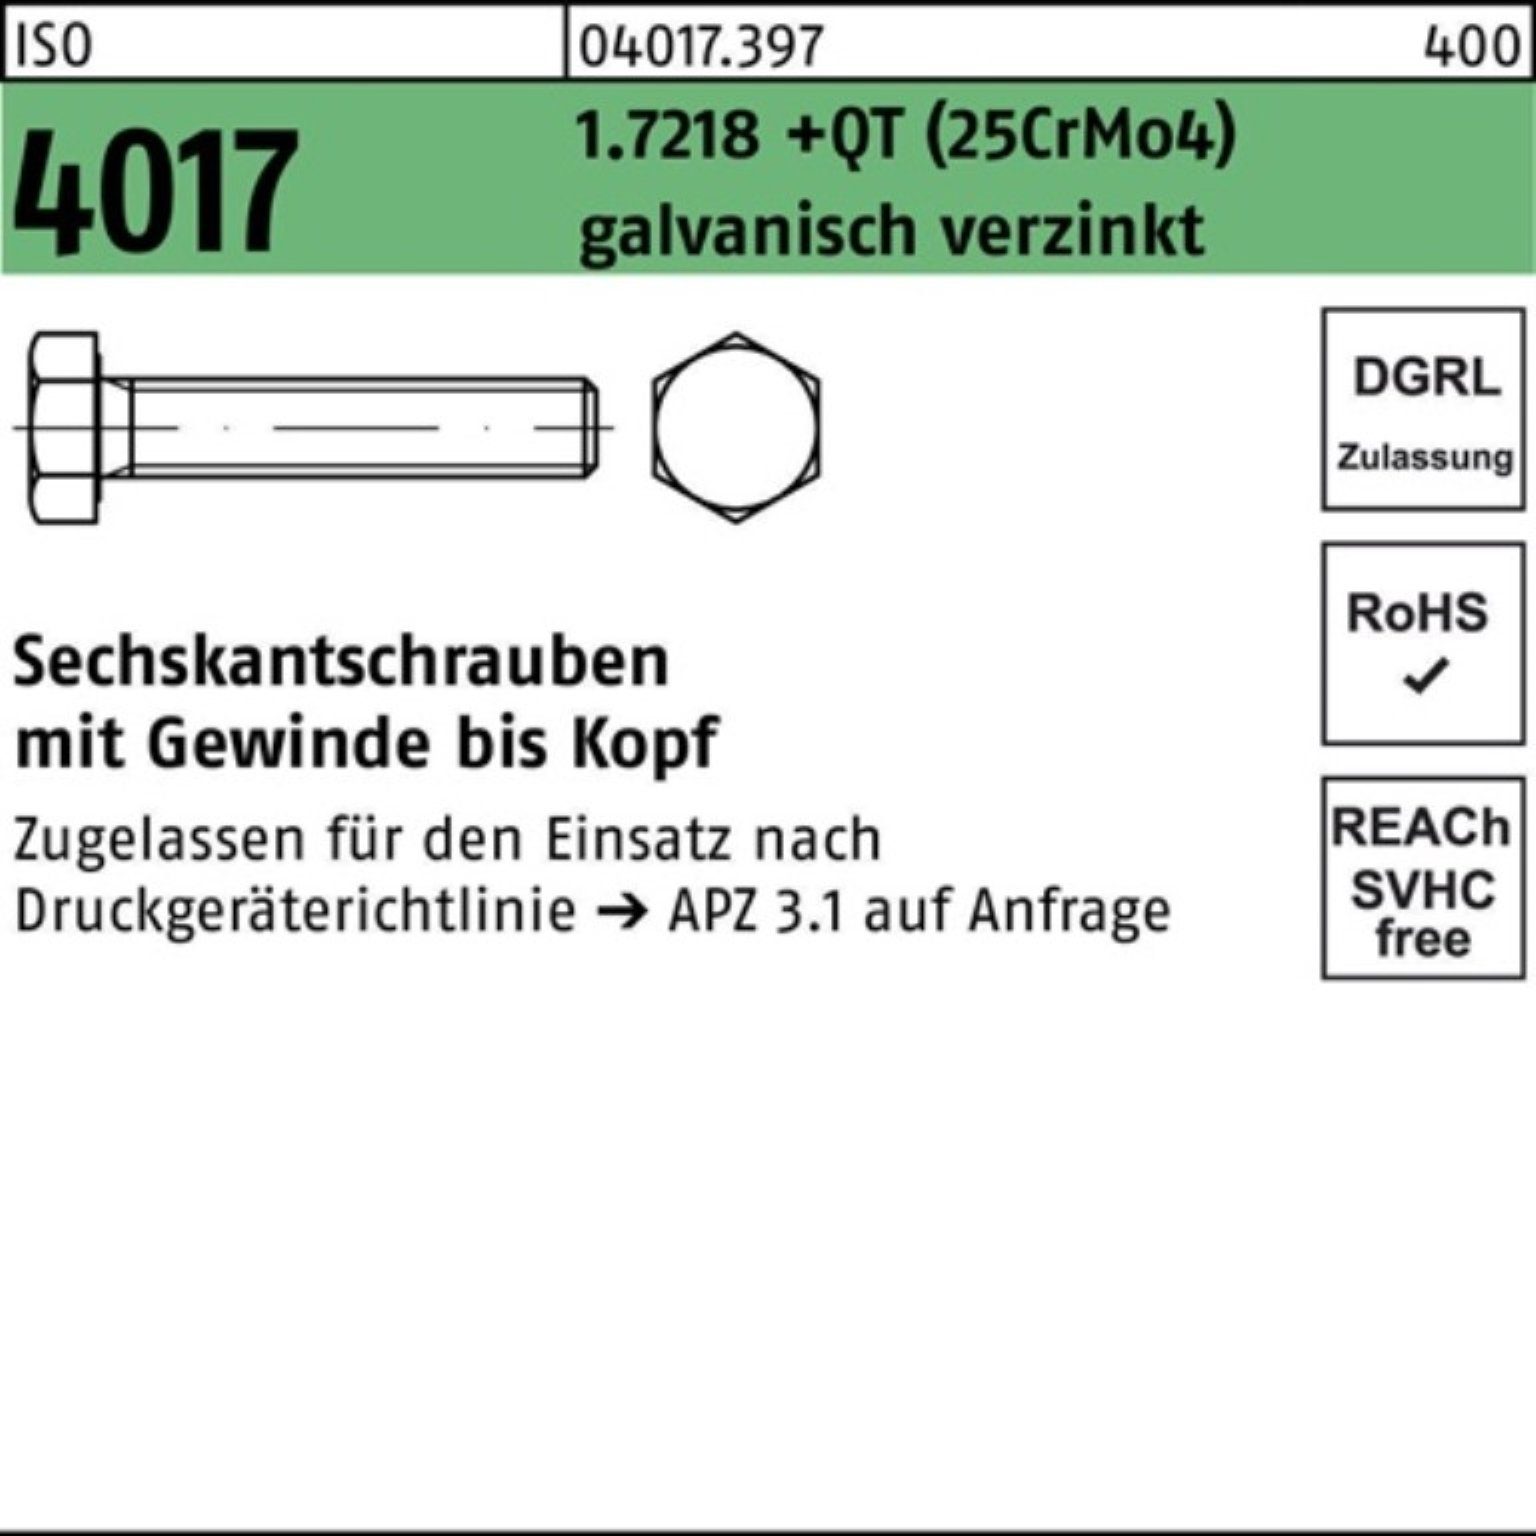 Bufab Sechskantschraube M24x70 g 1.7218 100er VG ISO 4017 Sechskantschraube +QT (25CrMo4) Pack